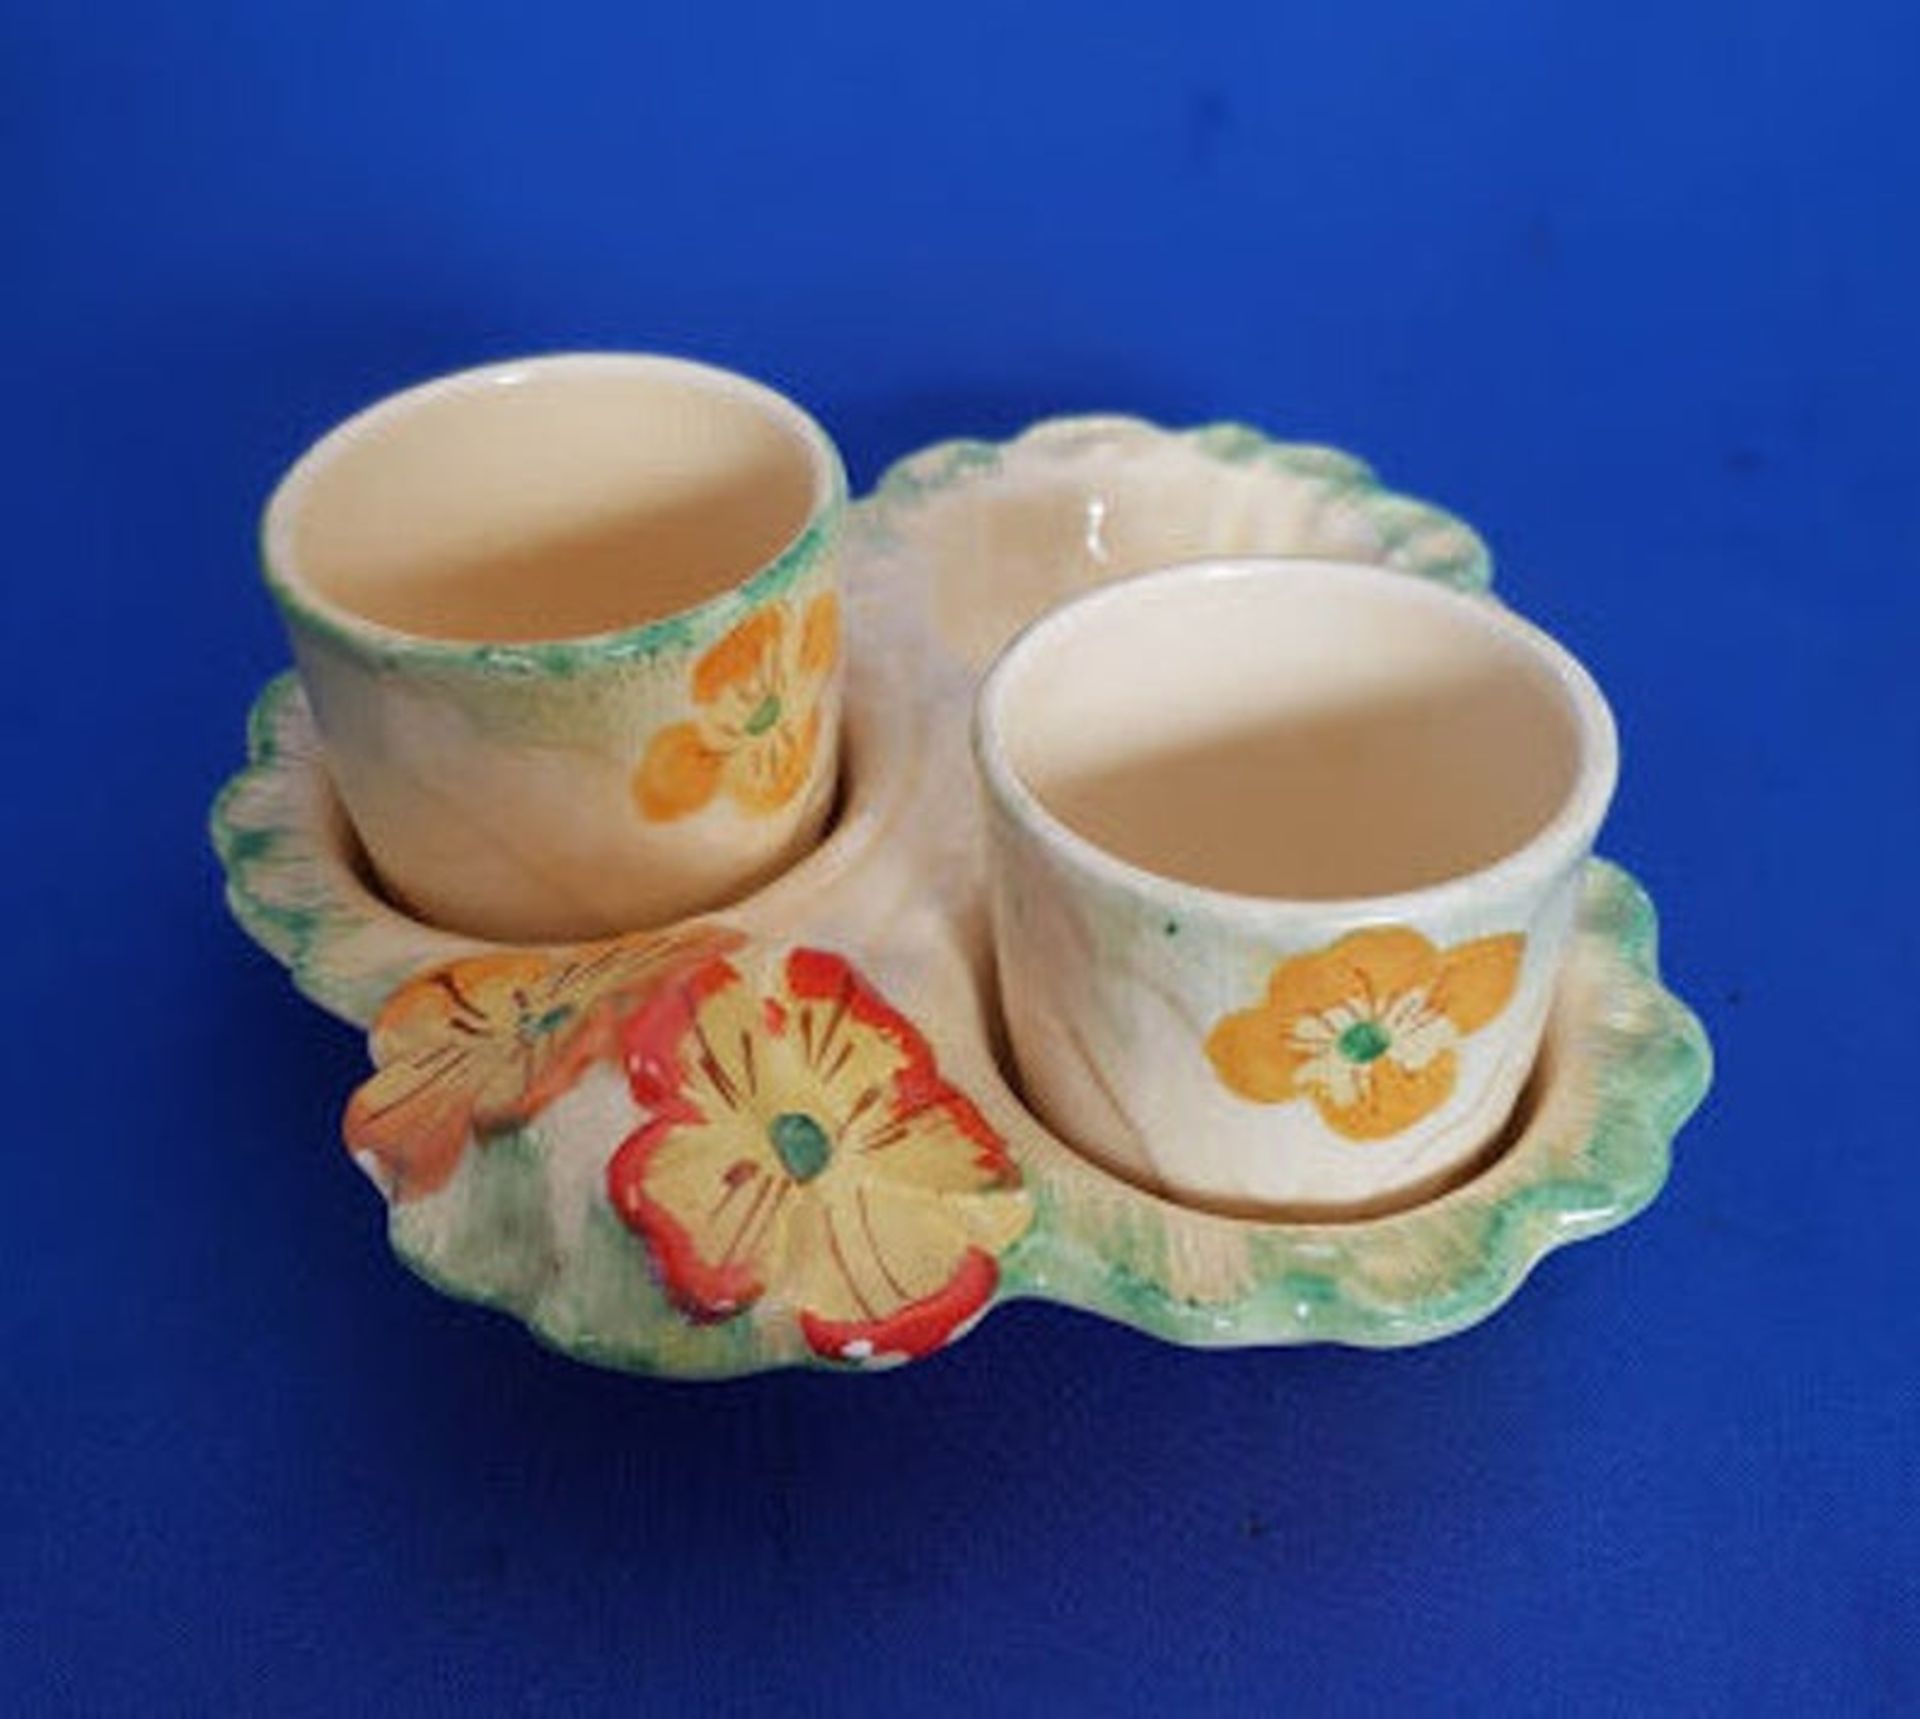 Kensington Ware Pottery Egg Cup Tray c1920 1930 Primula pattern